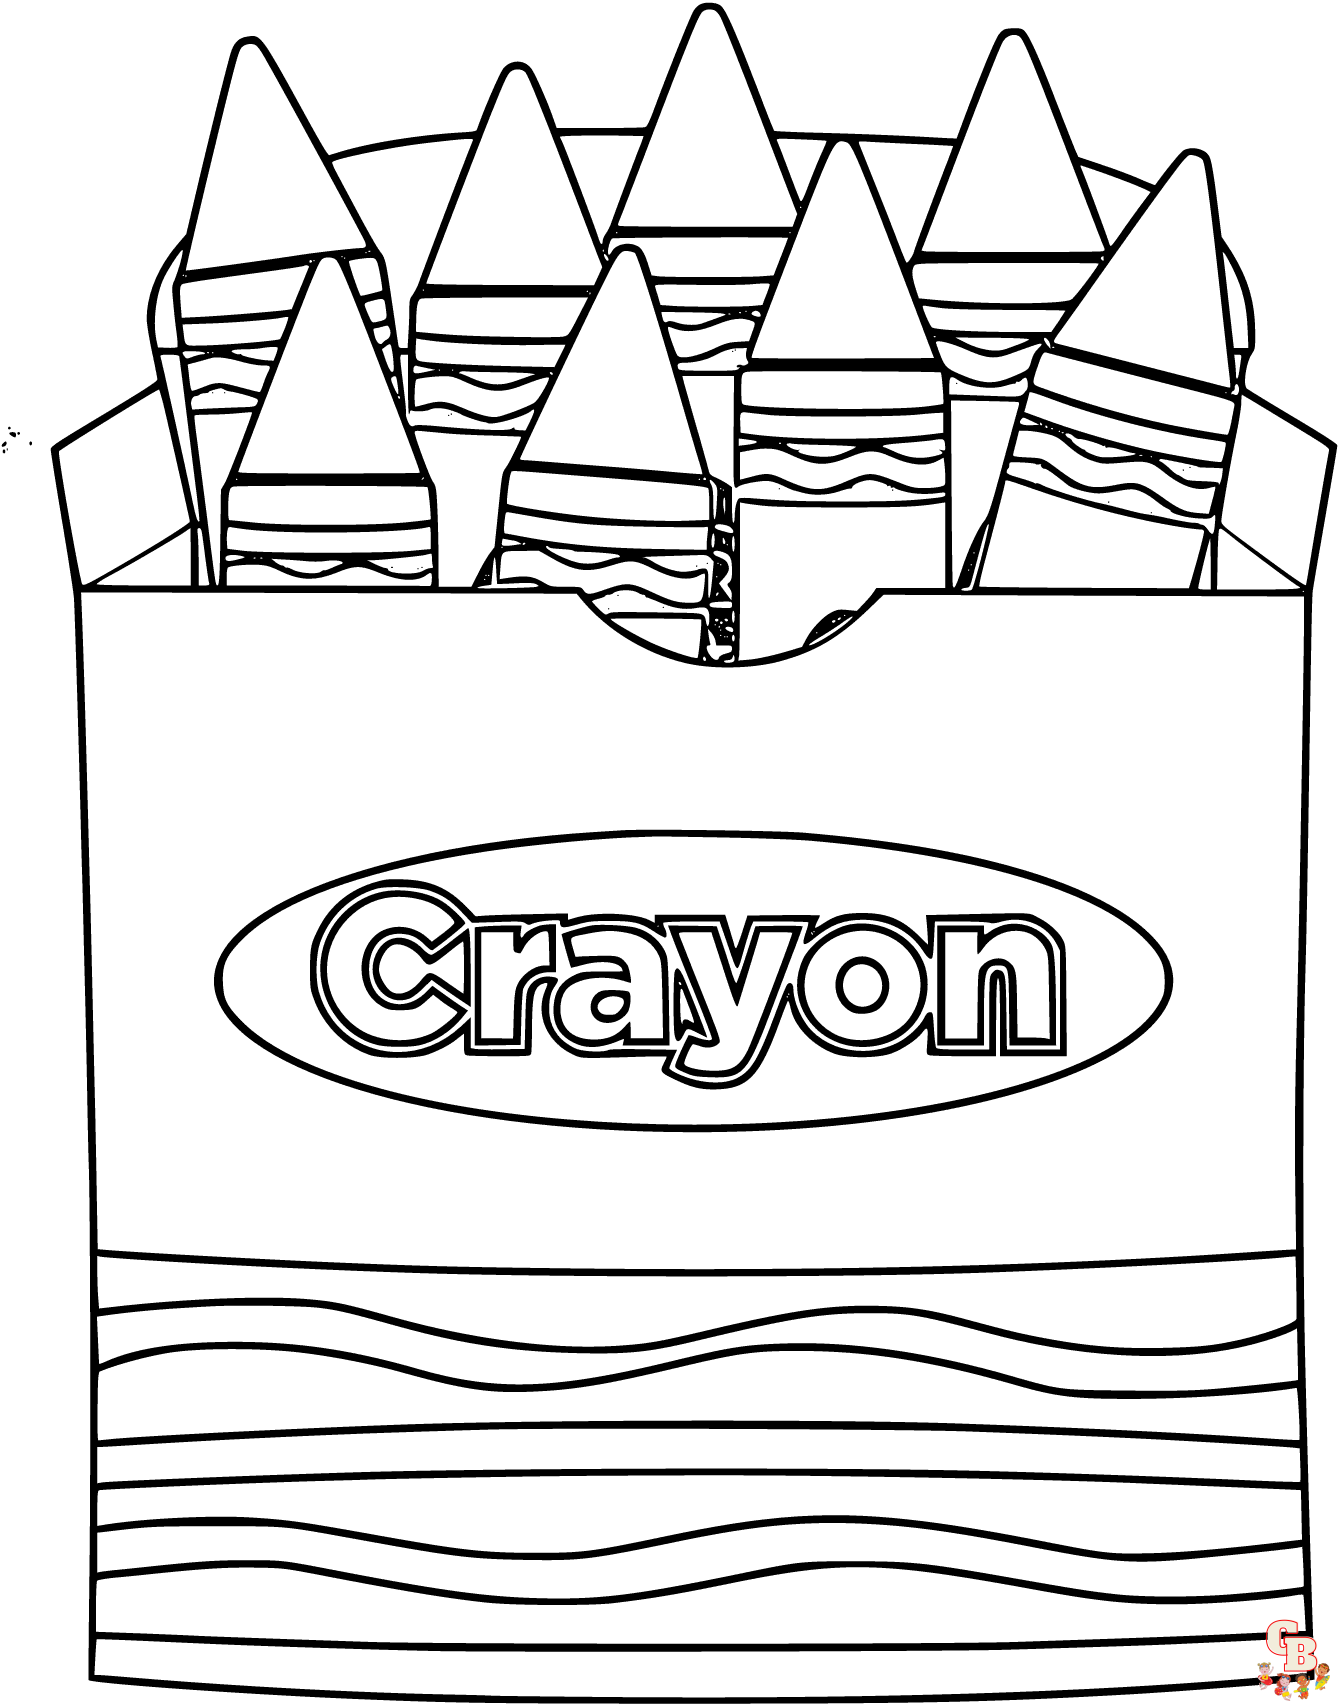 Printable Crayon coloring sheets